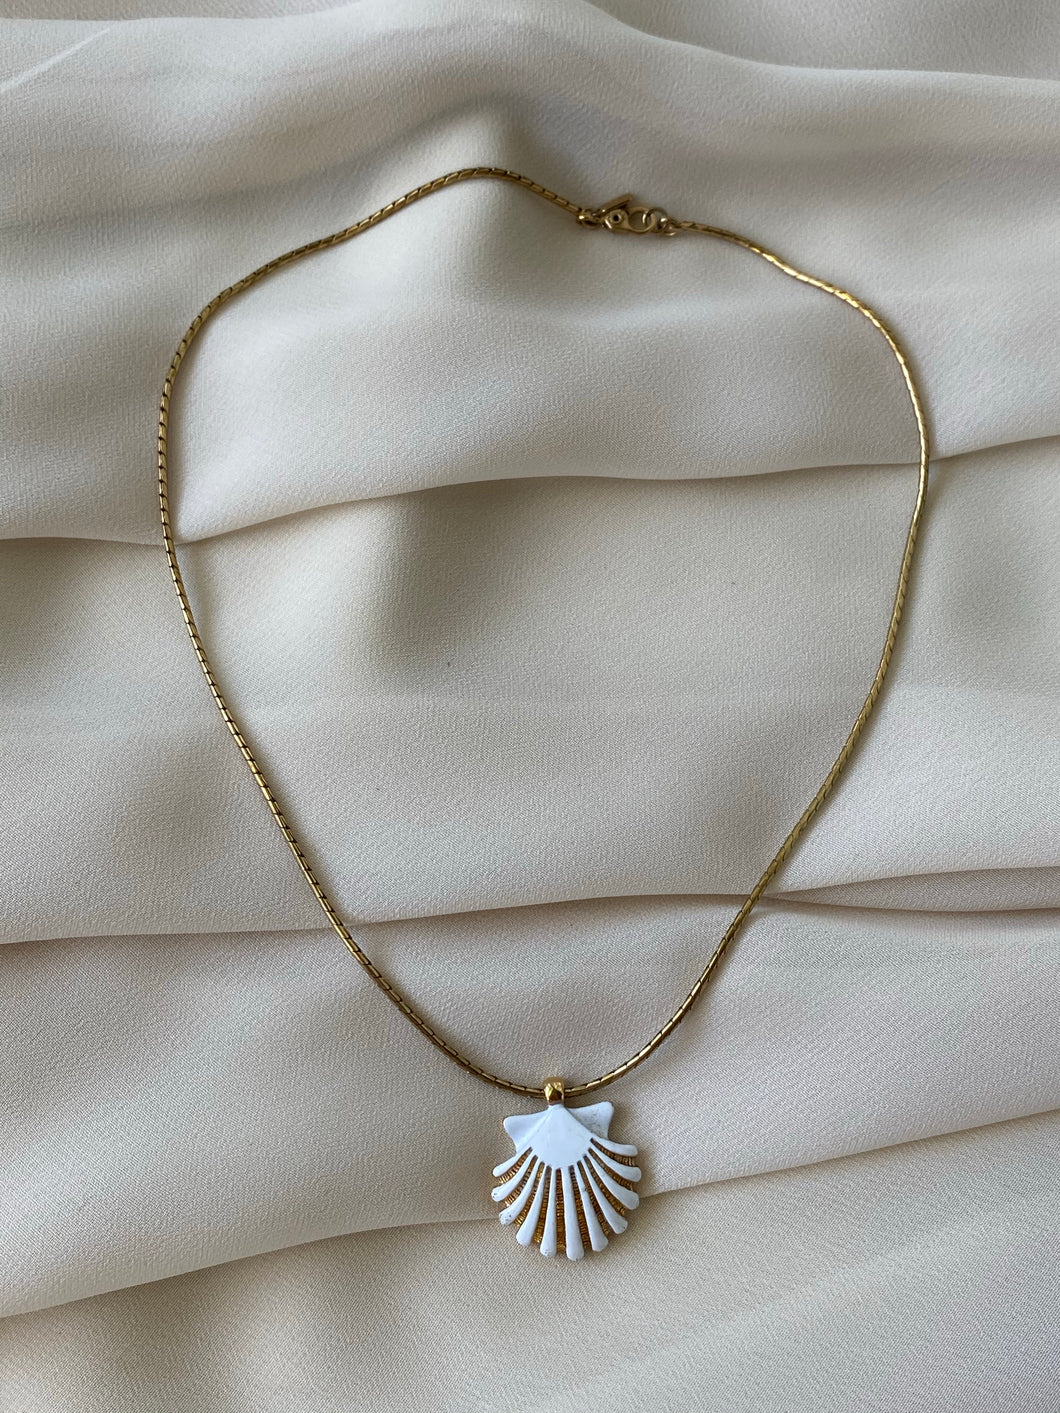 Monet Shell Pendant Necklace White Enamel on Gold Tone, 1970s Vintage